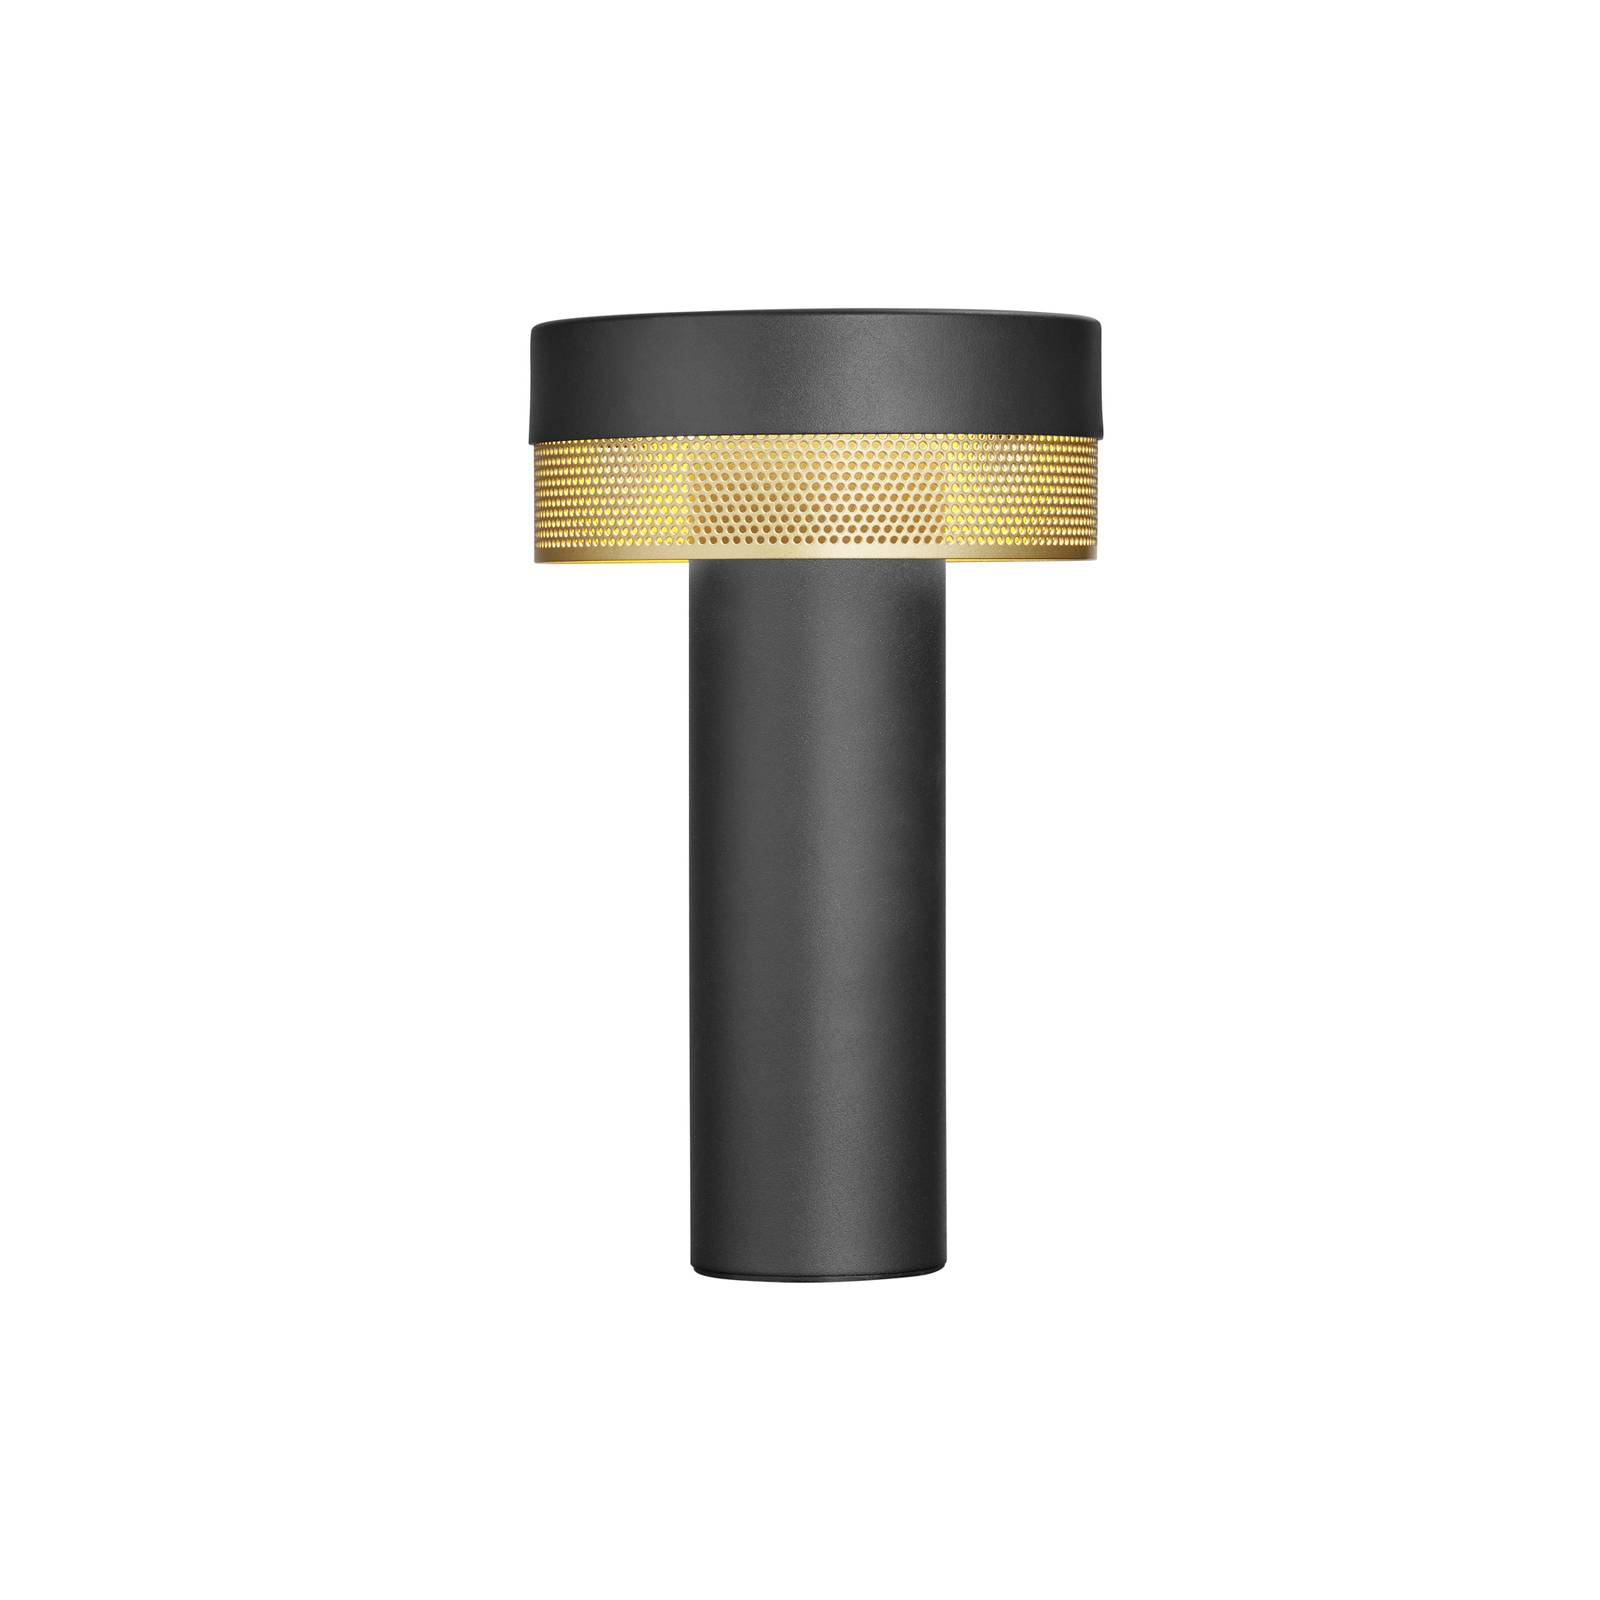 HELL LED-Tischlampe Mesh Akku, Höhe 24cm, schwarz/gold